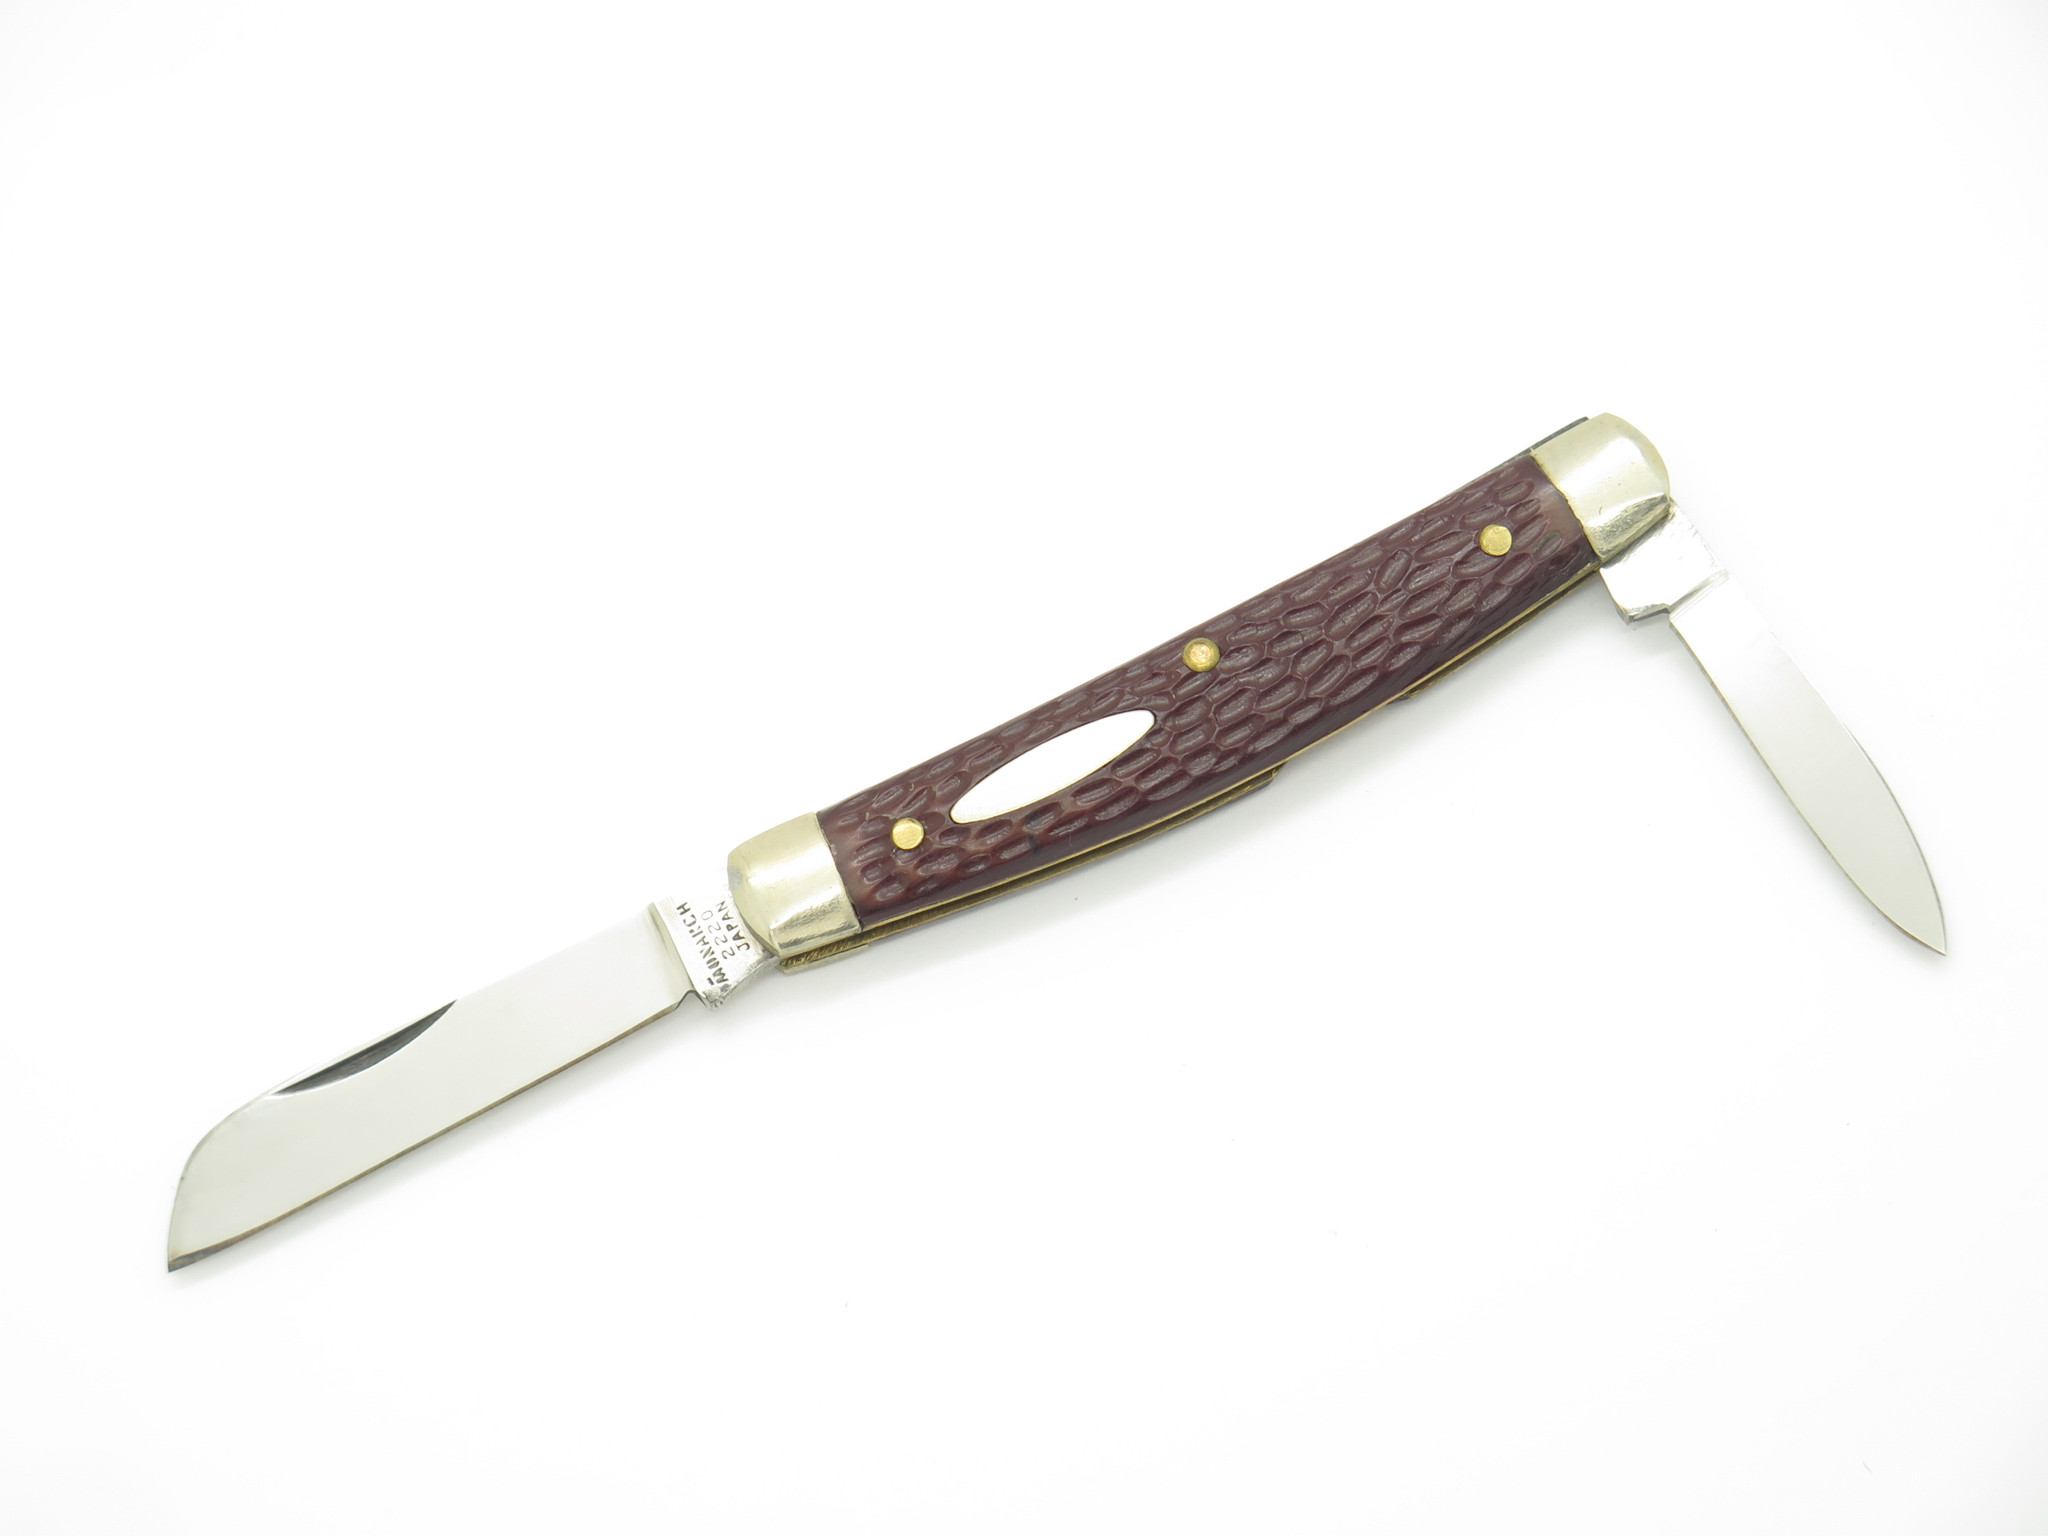 Vintage Japanese Monarch #2233 Folding Pocket Fishing Knife with